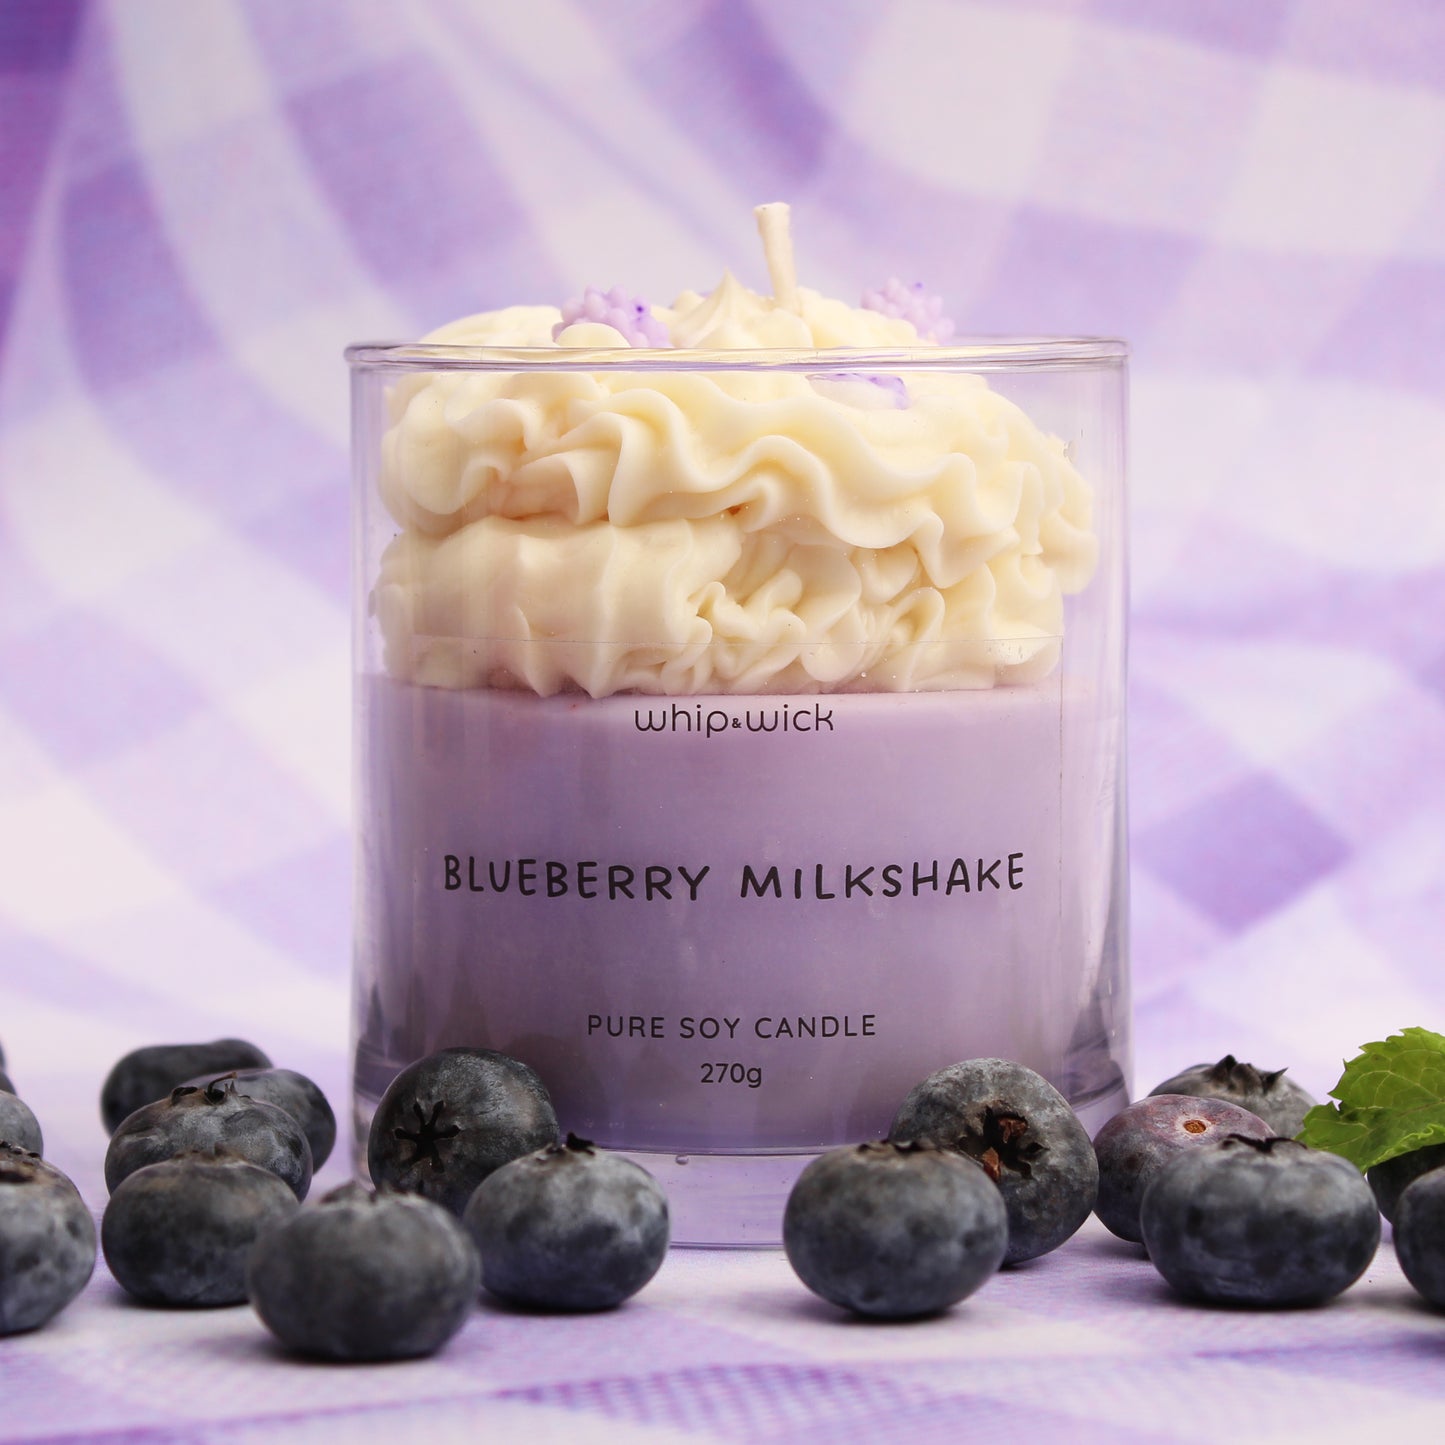 Blueberry Milkshake Scented Candle